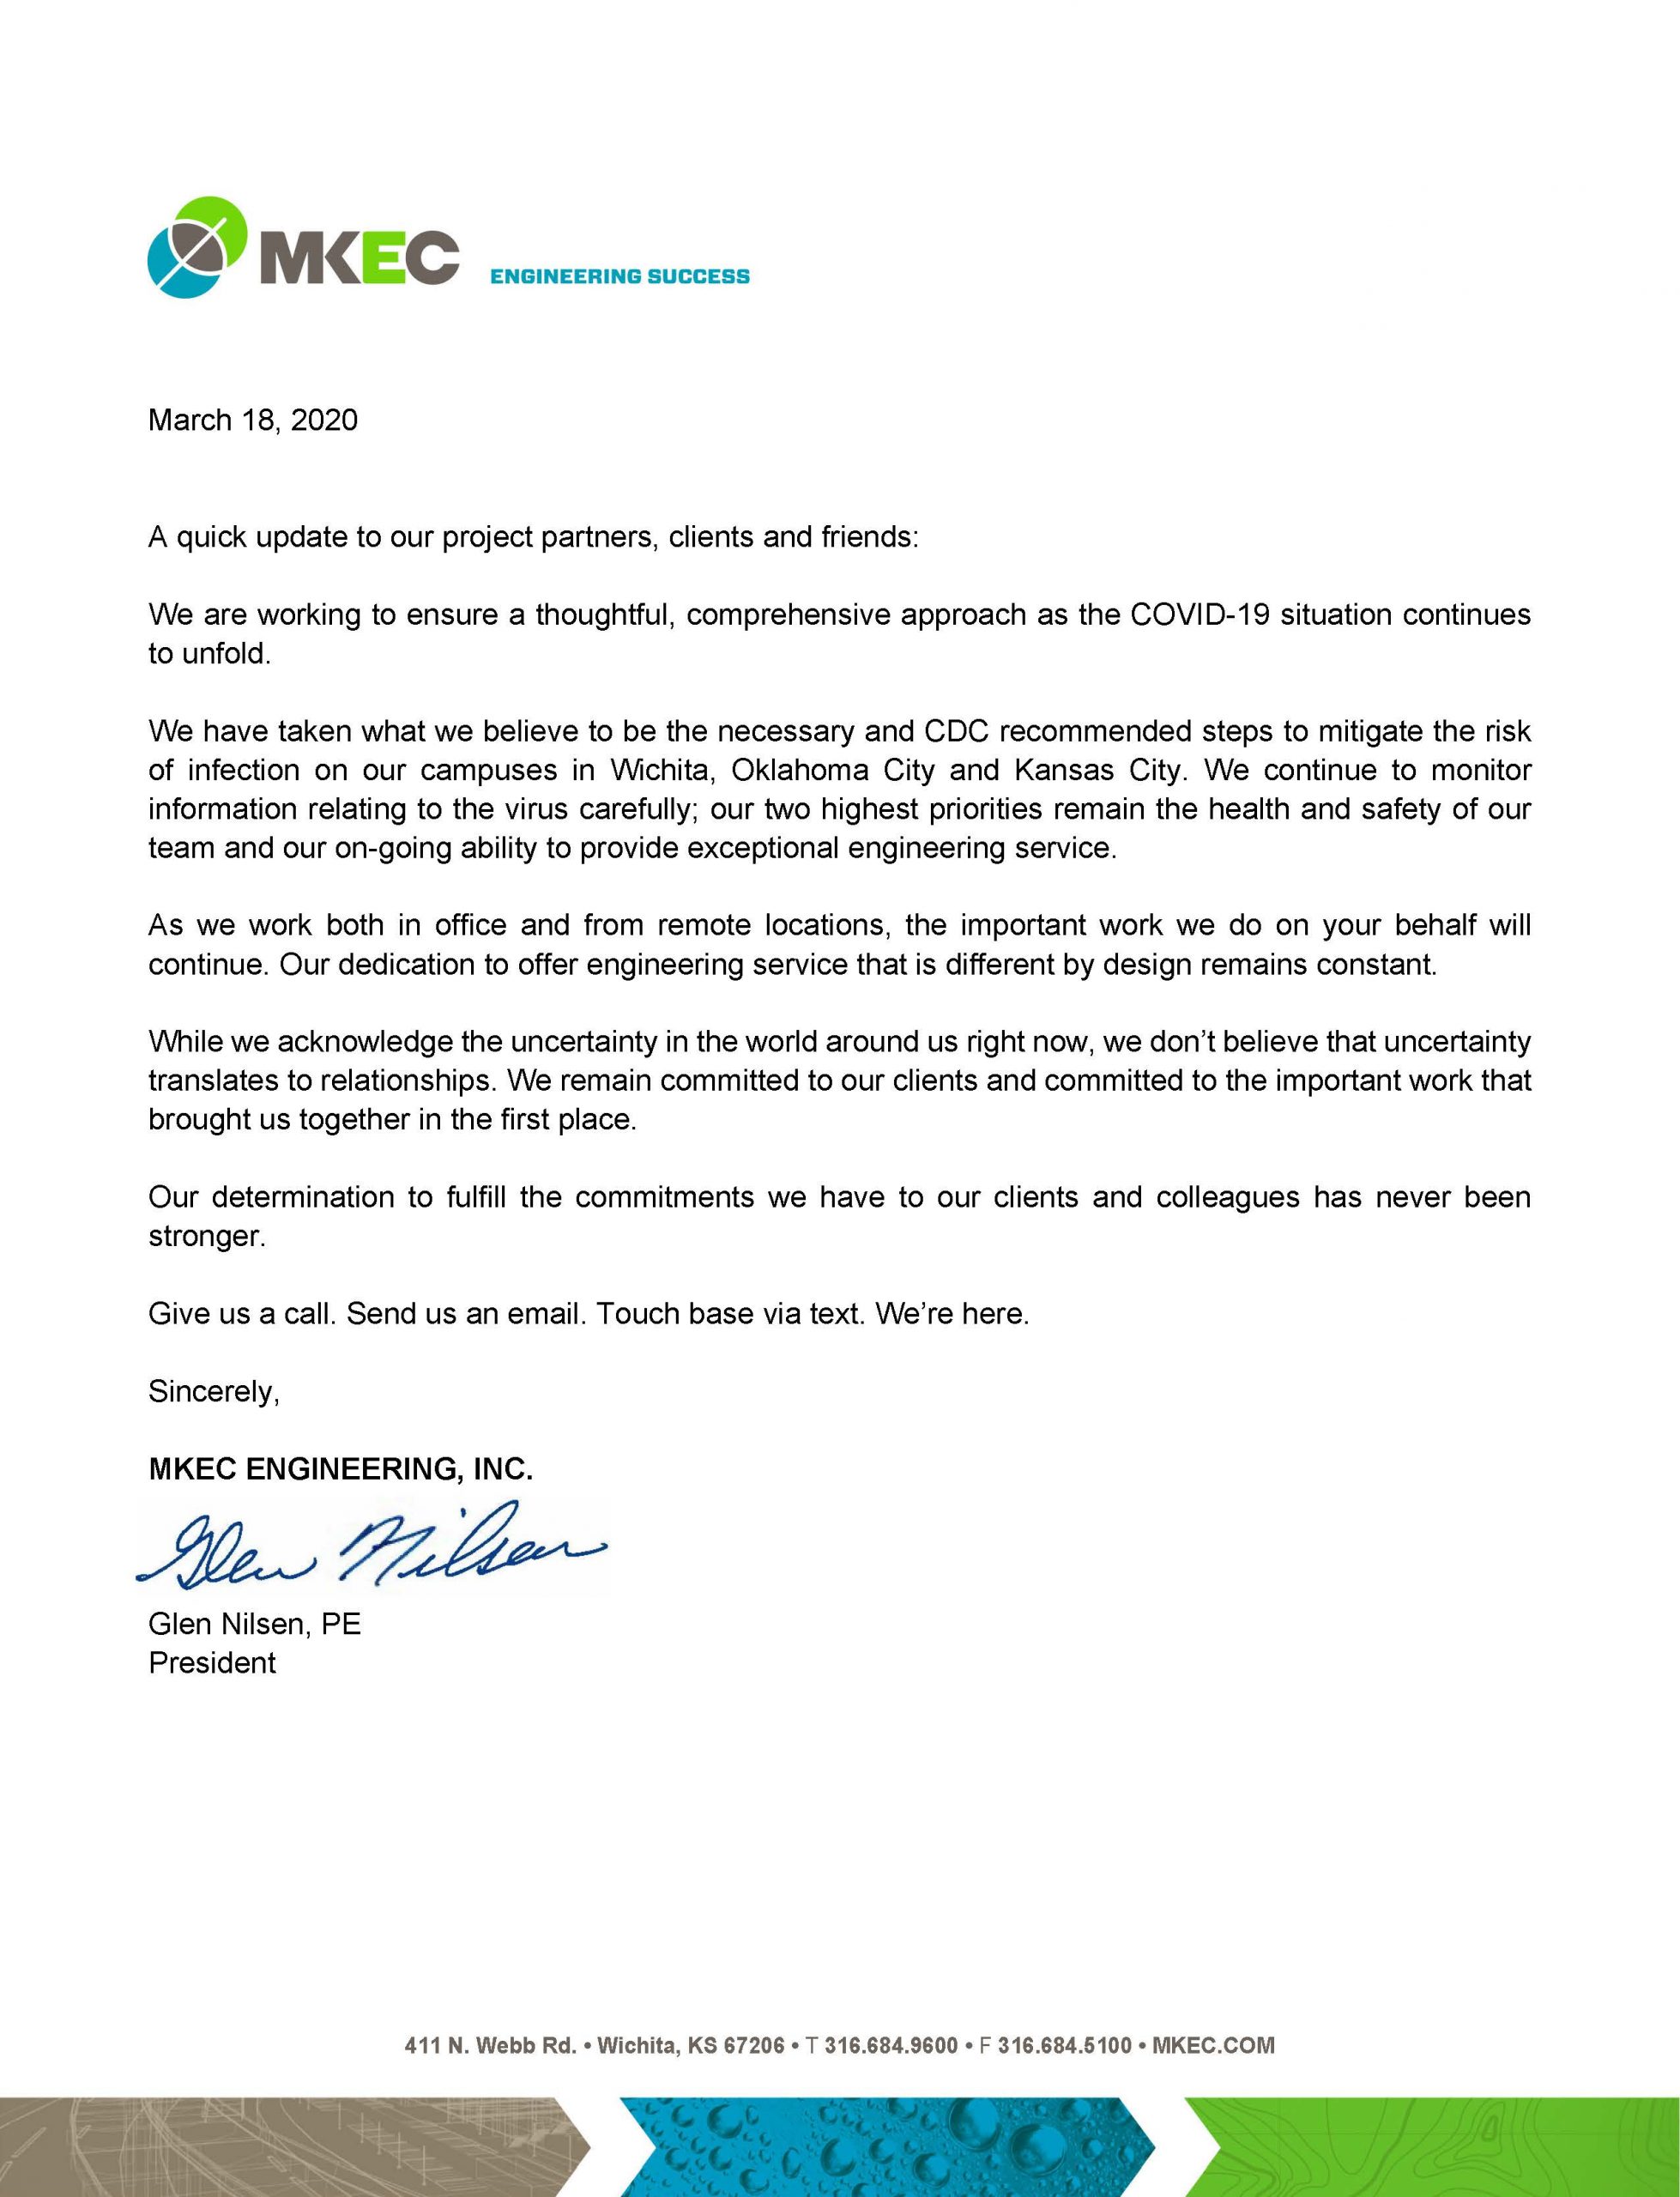 MKEC company statement